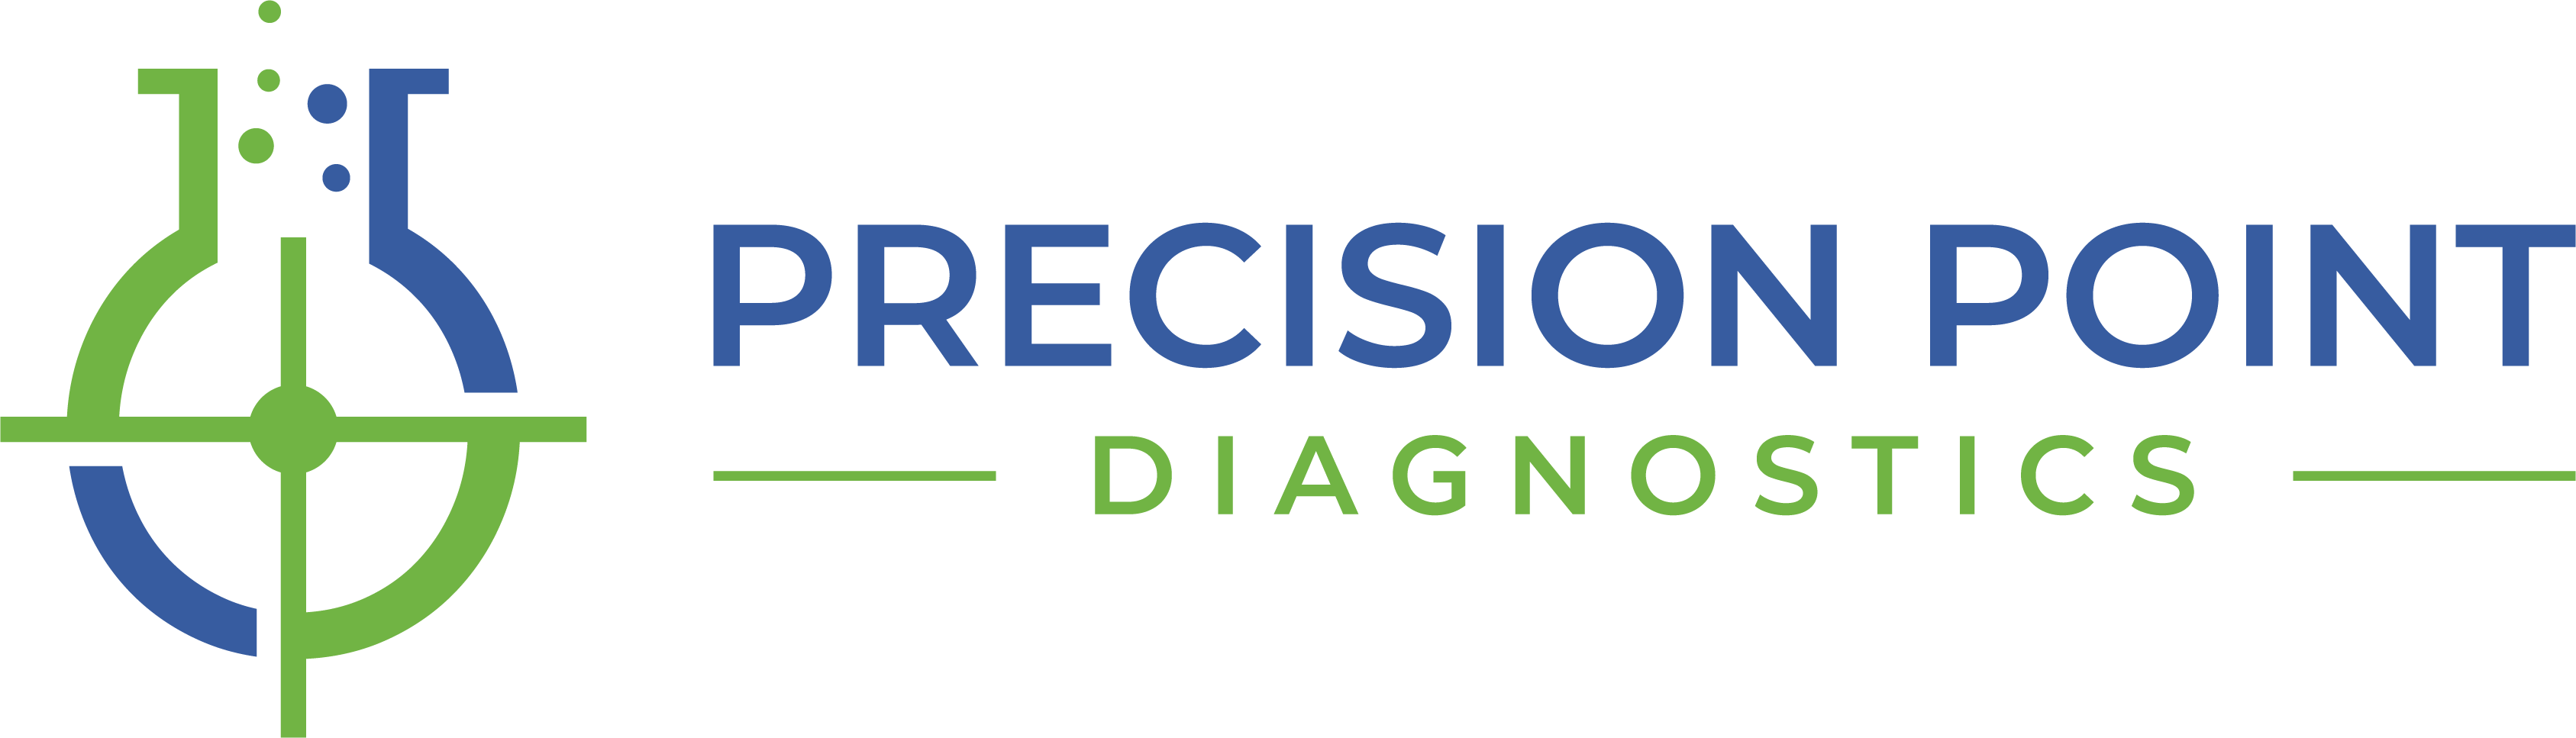 precision-point-diagnostics-logo-primary